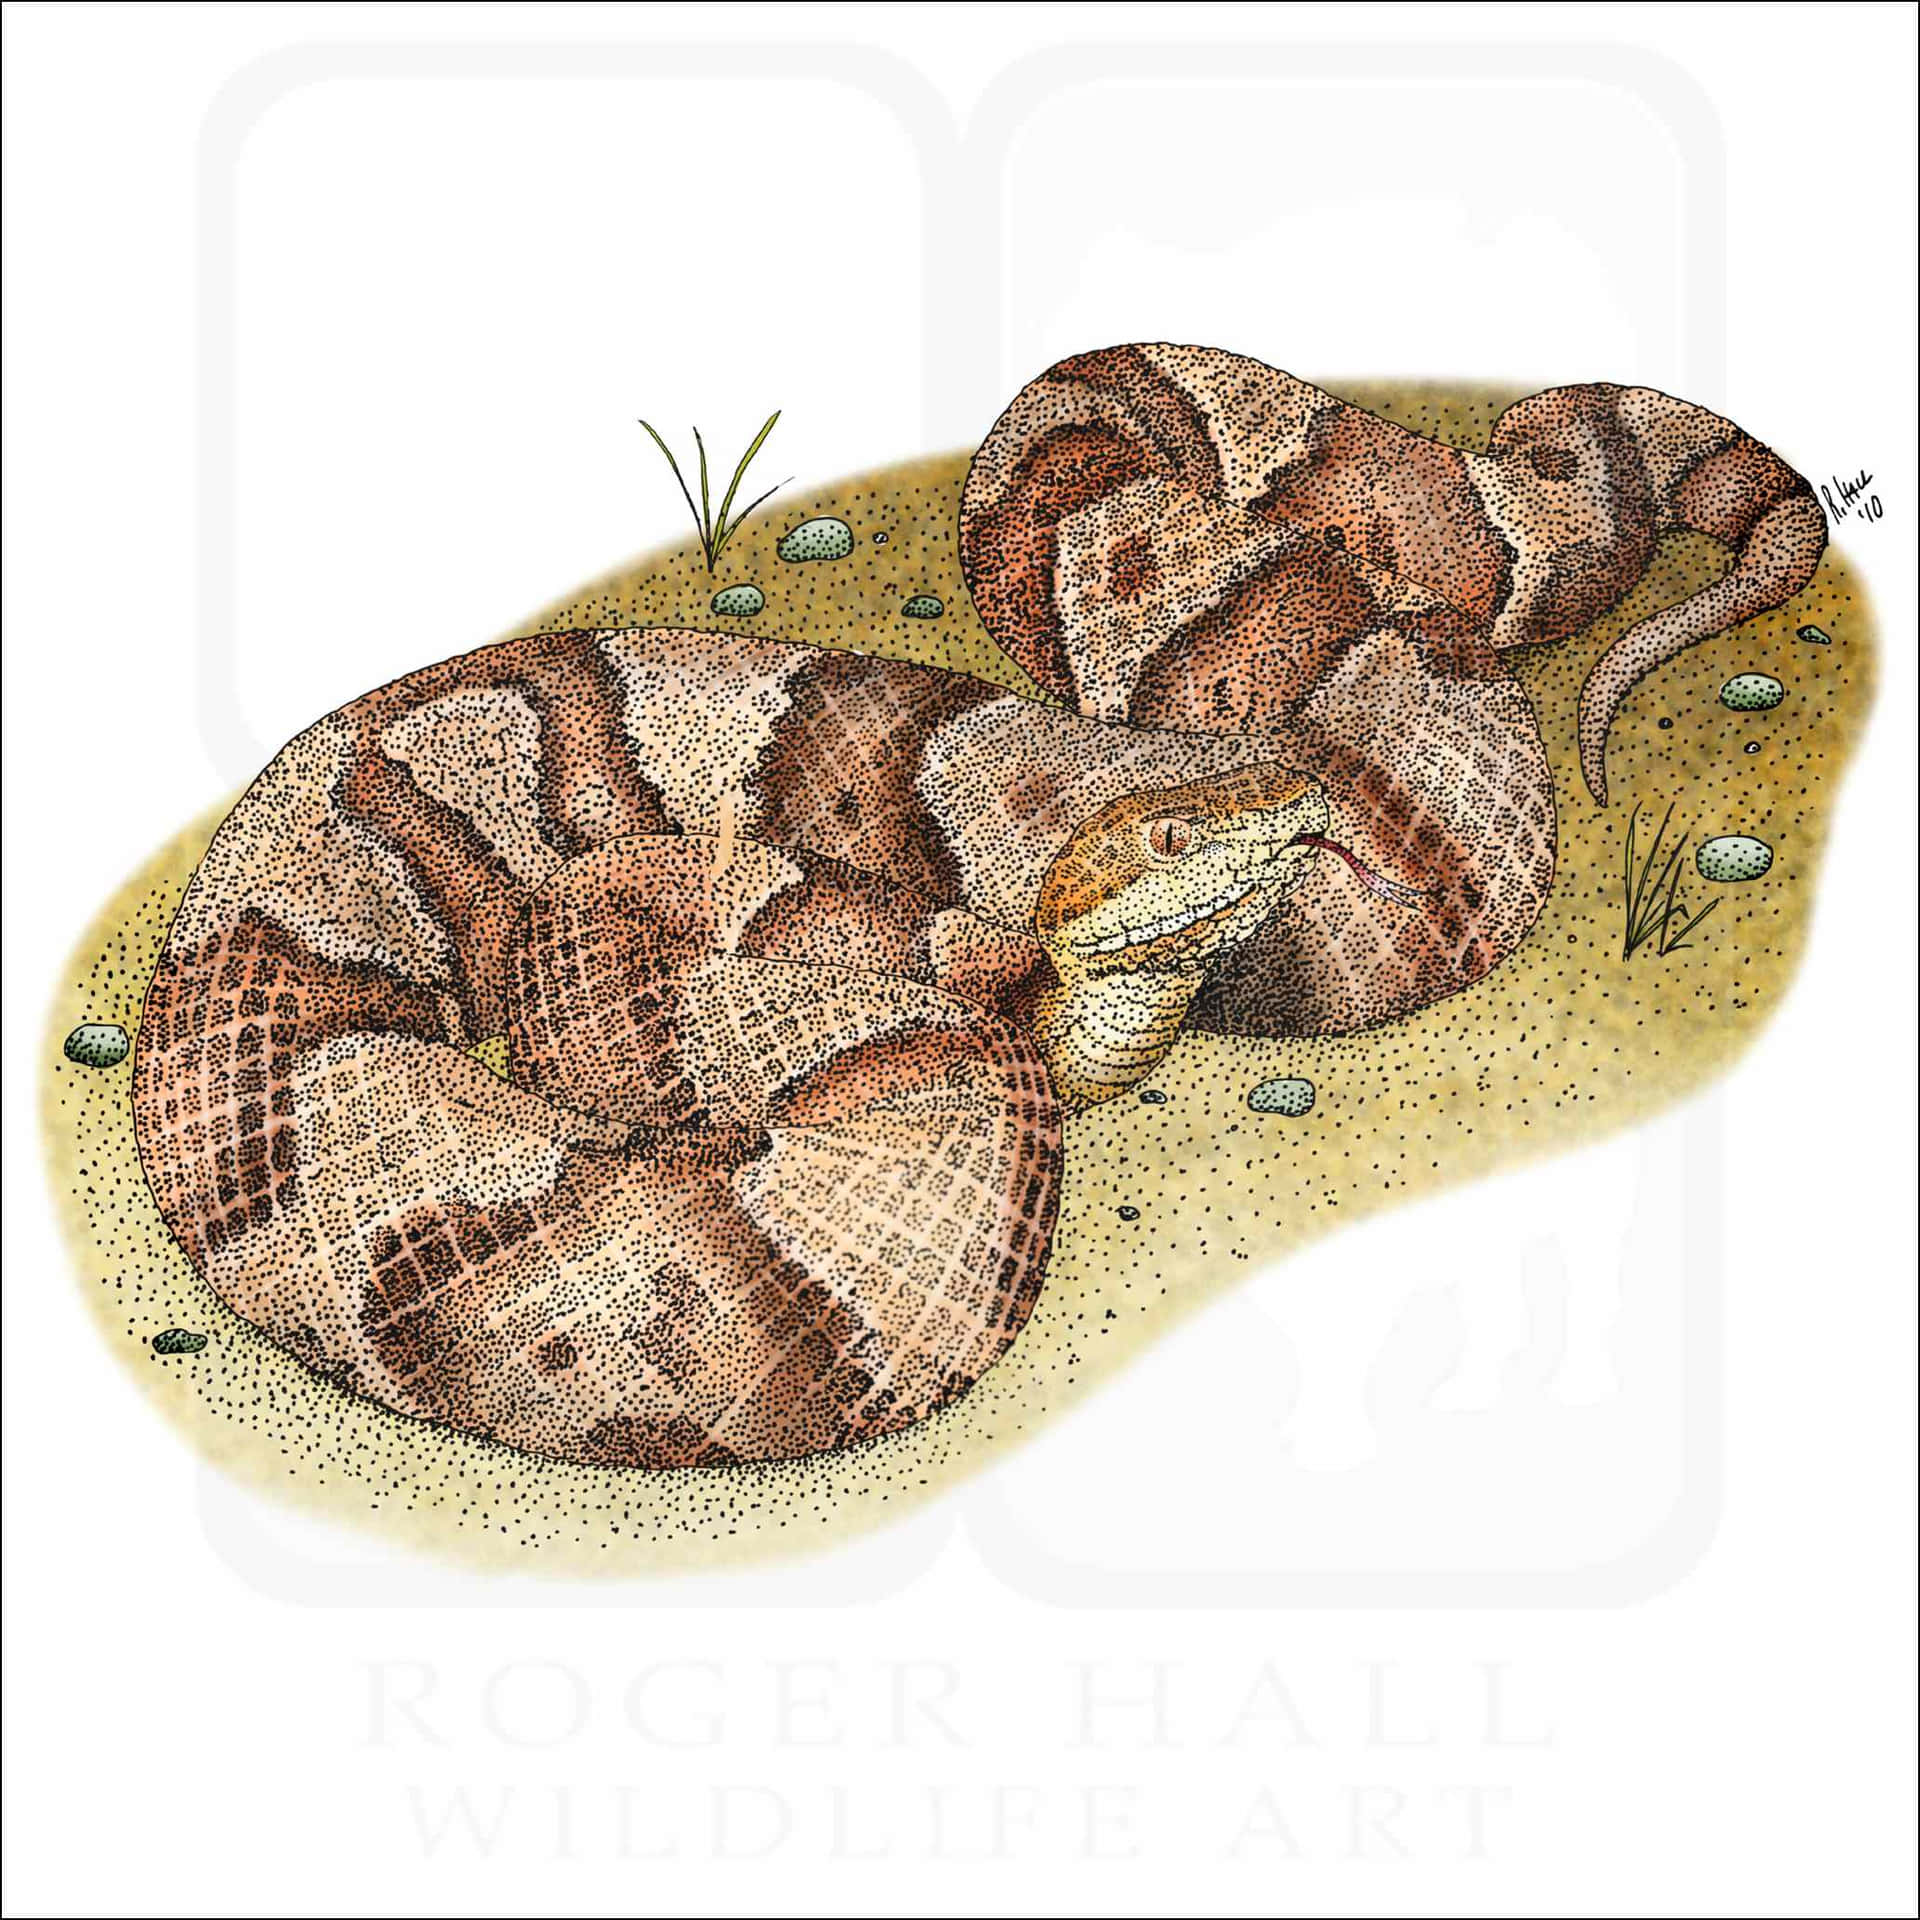 A Copperhead Snake Slithering Among Rocks